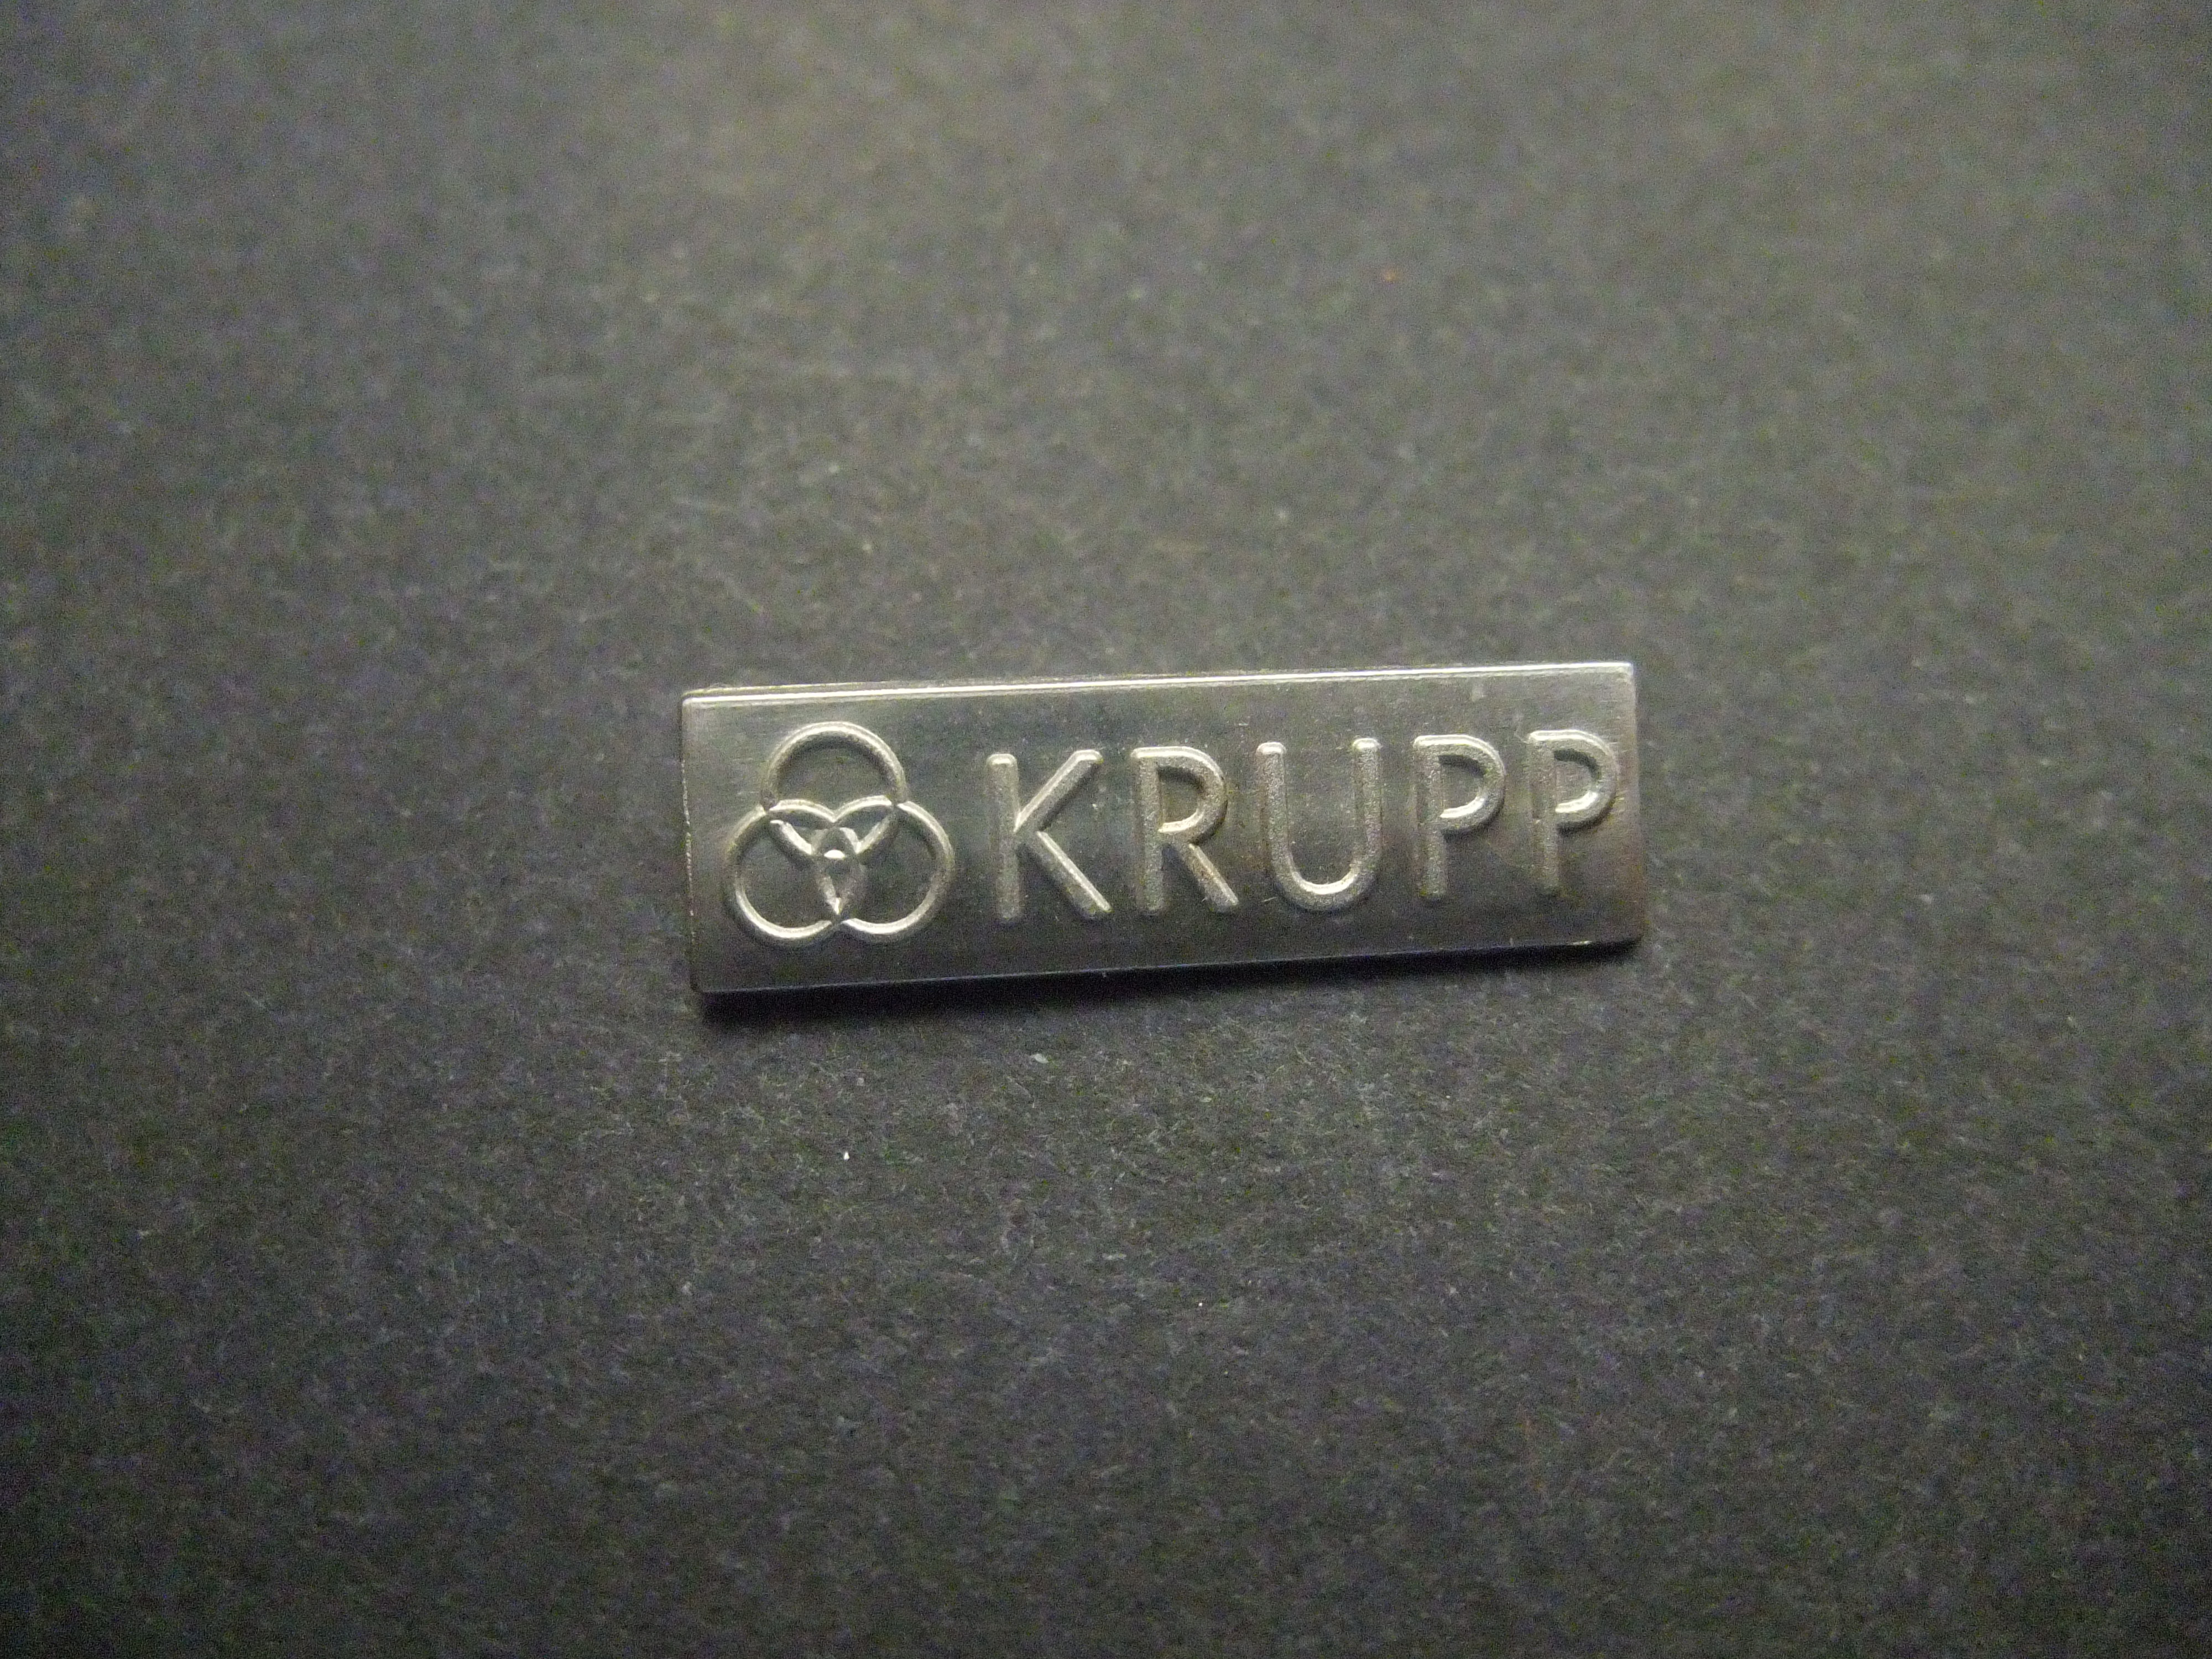 Krupp grote fabrikant van staal die ook vrachtwagens produceerde, zilverkleurig logo